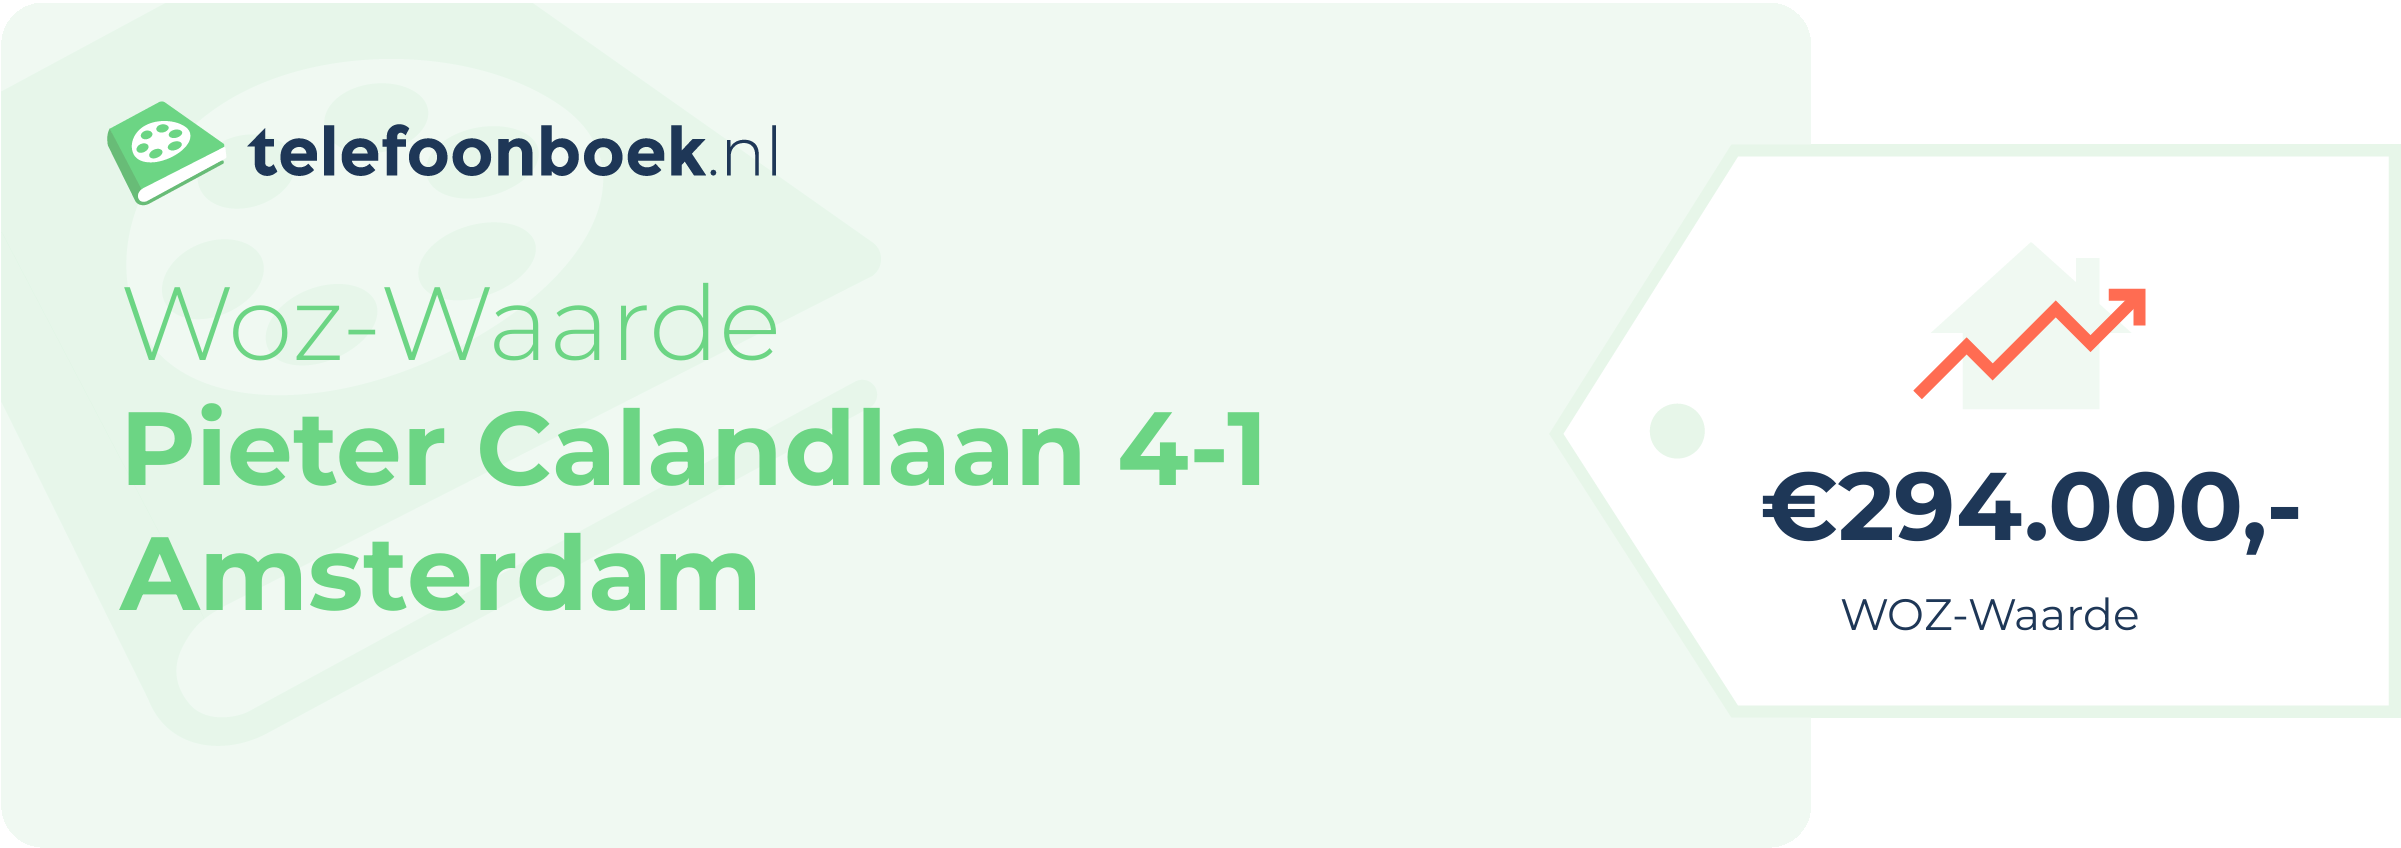 WOZ-waarde Pieter Calandlaan 4-1 Amsterdam